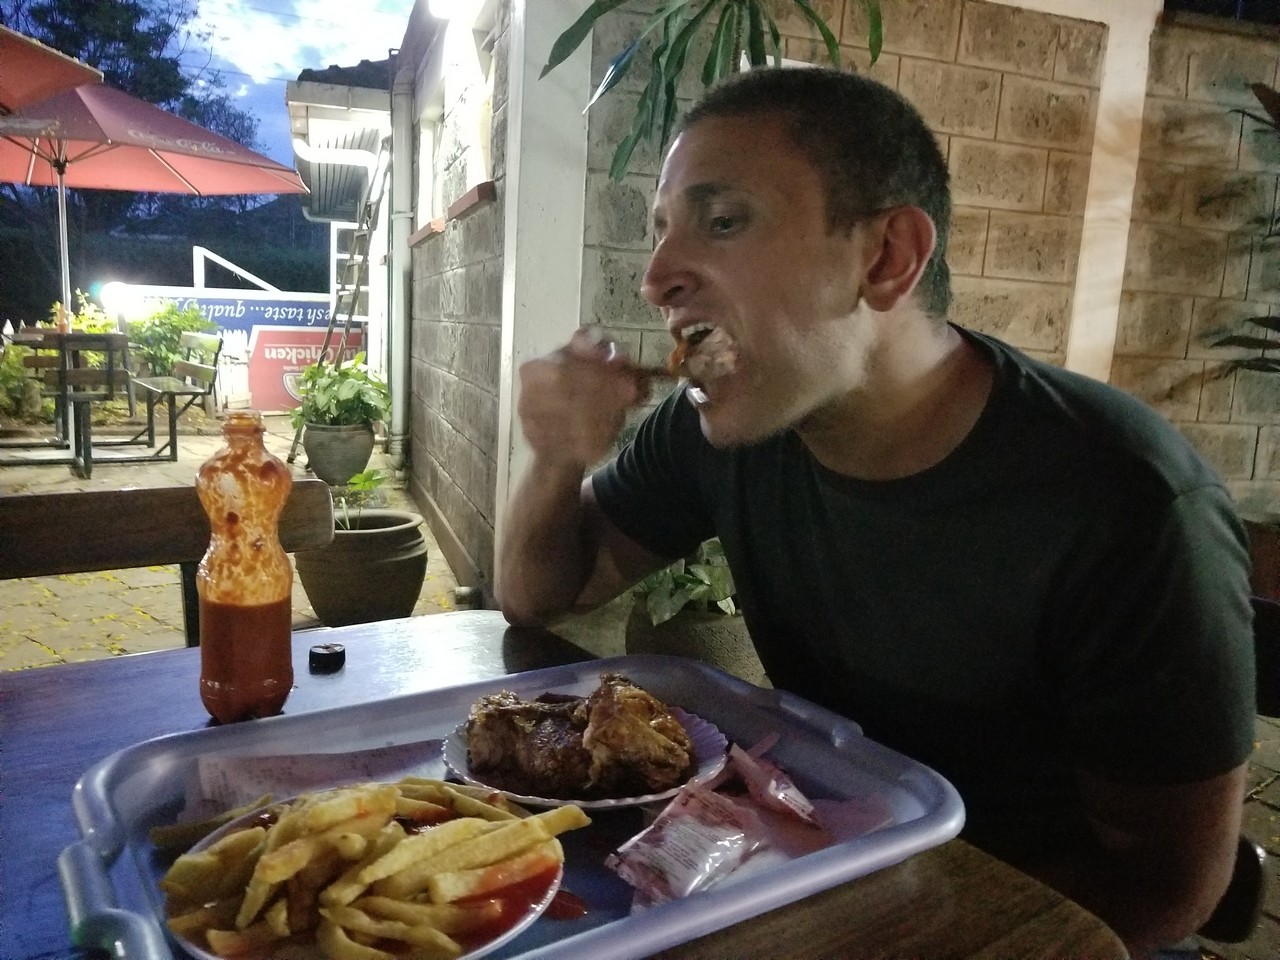 a man eating food at a table